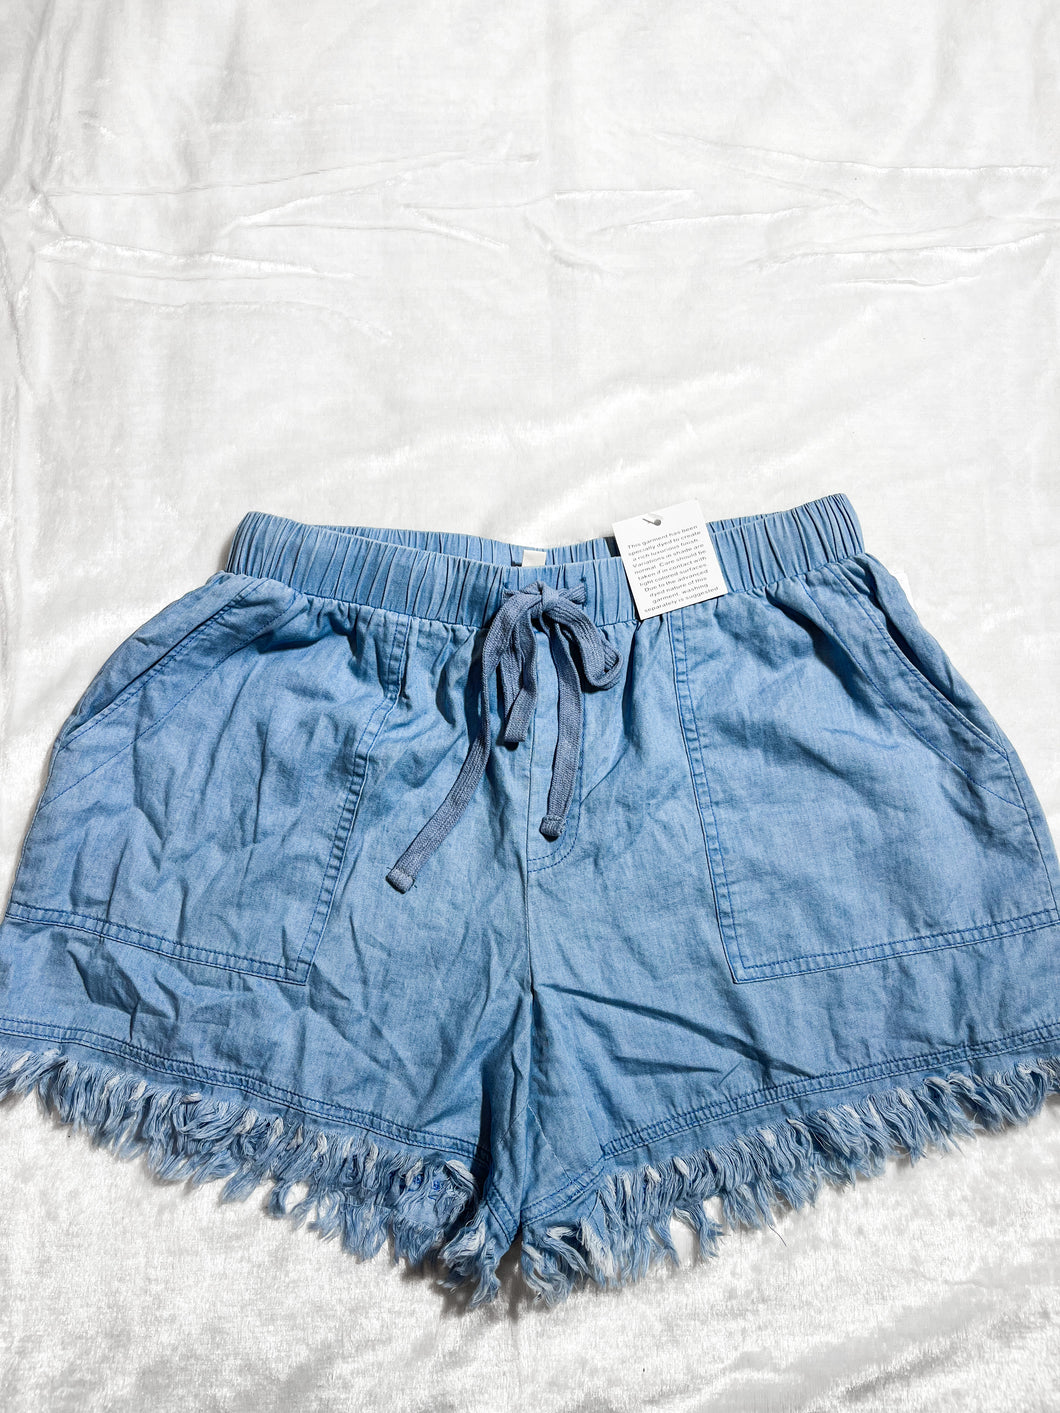 Mazik Womens Shorts Size Large * - Plato's Closet Bridgeville, PA